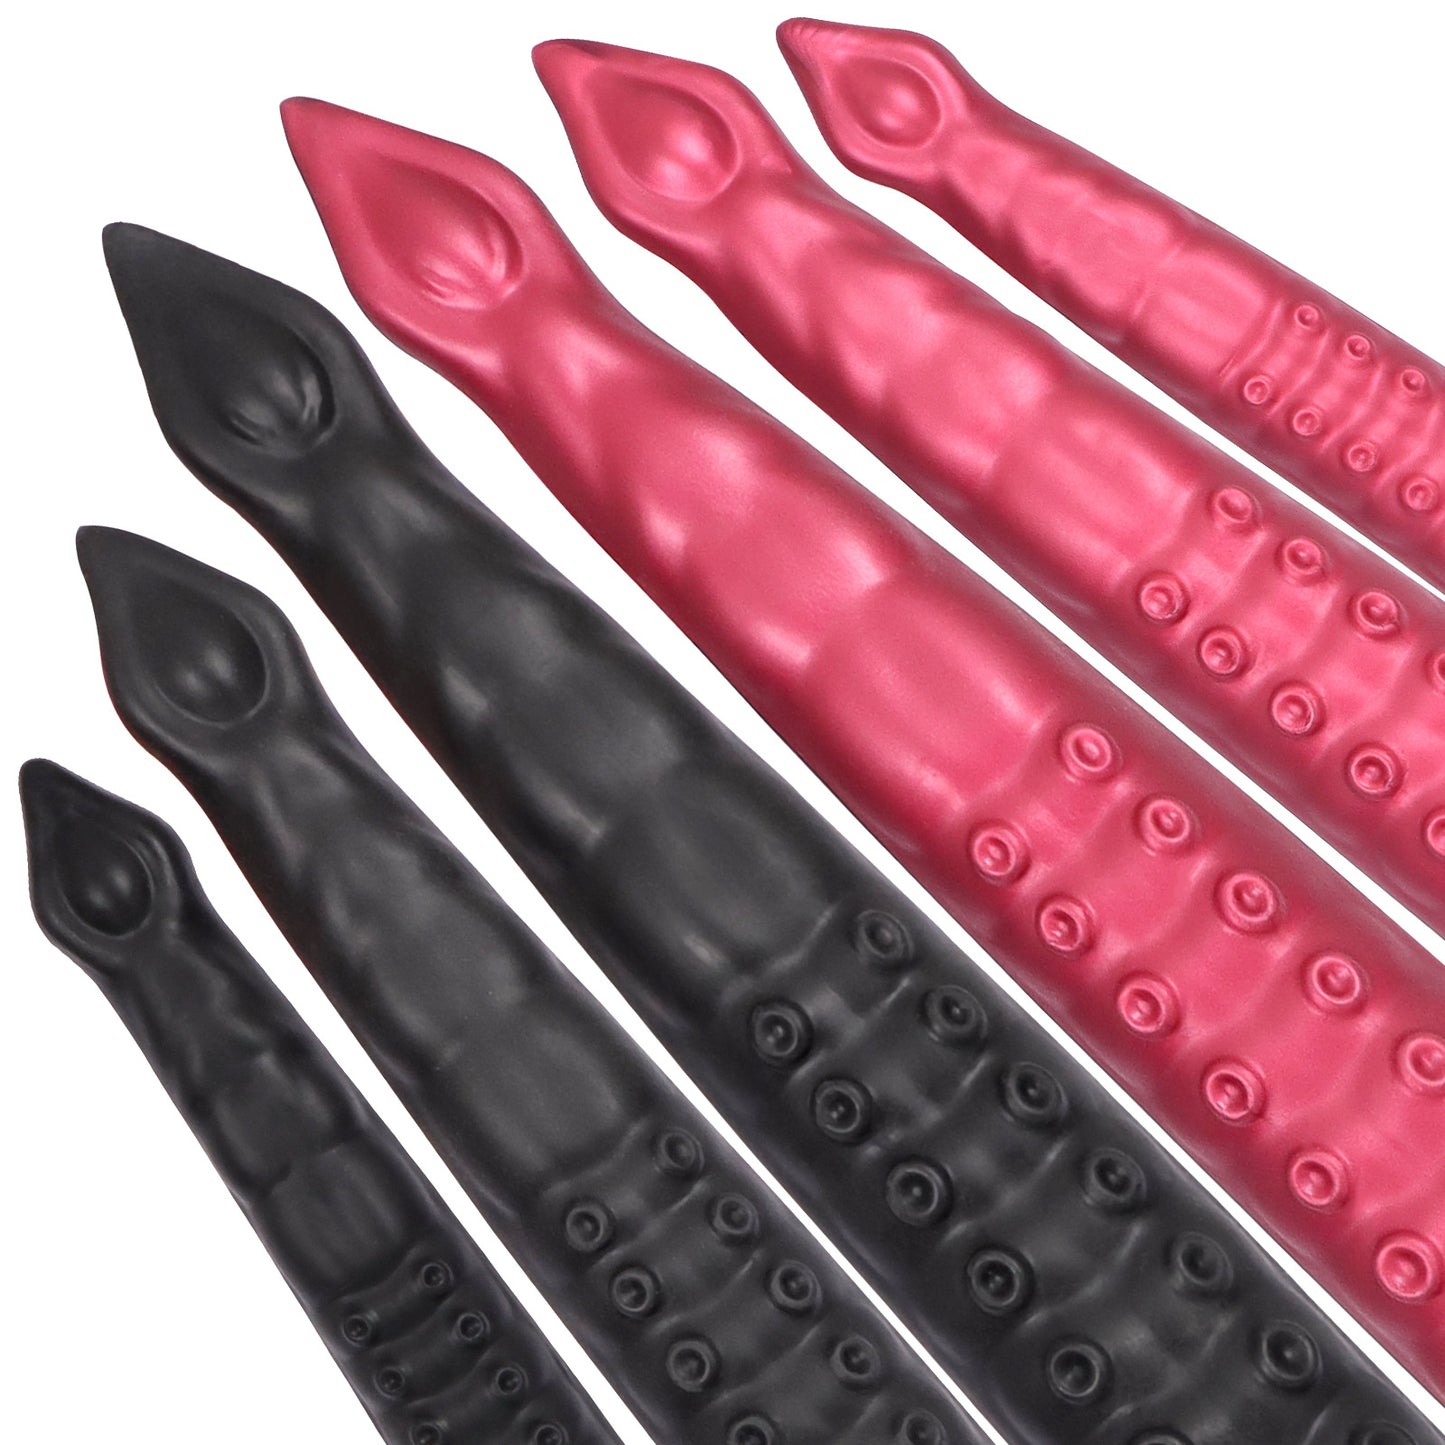 Long Tentacle Monsterdildos Butt Plug - Silicone Realistic Anal Dildo Sex Toy for Men Women